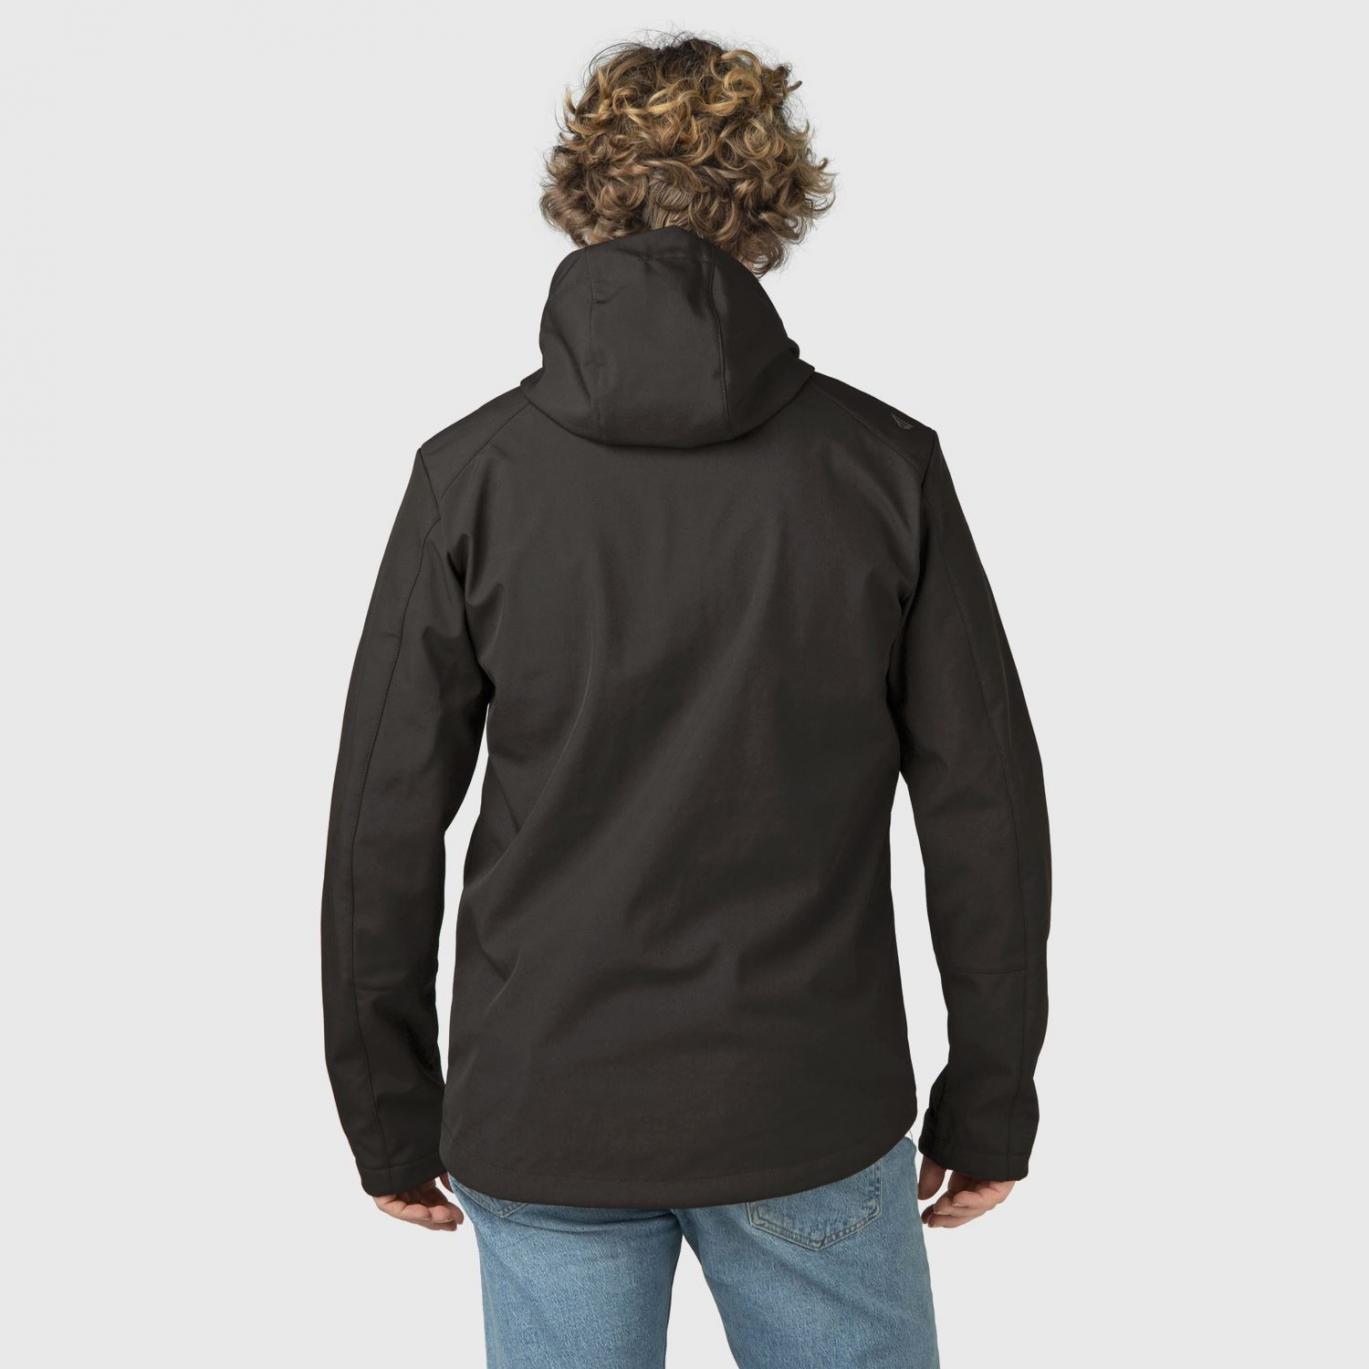 Details about   Brunotti Softshell Jacket Ski Jacket Black Windproof Resistant 